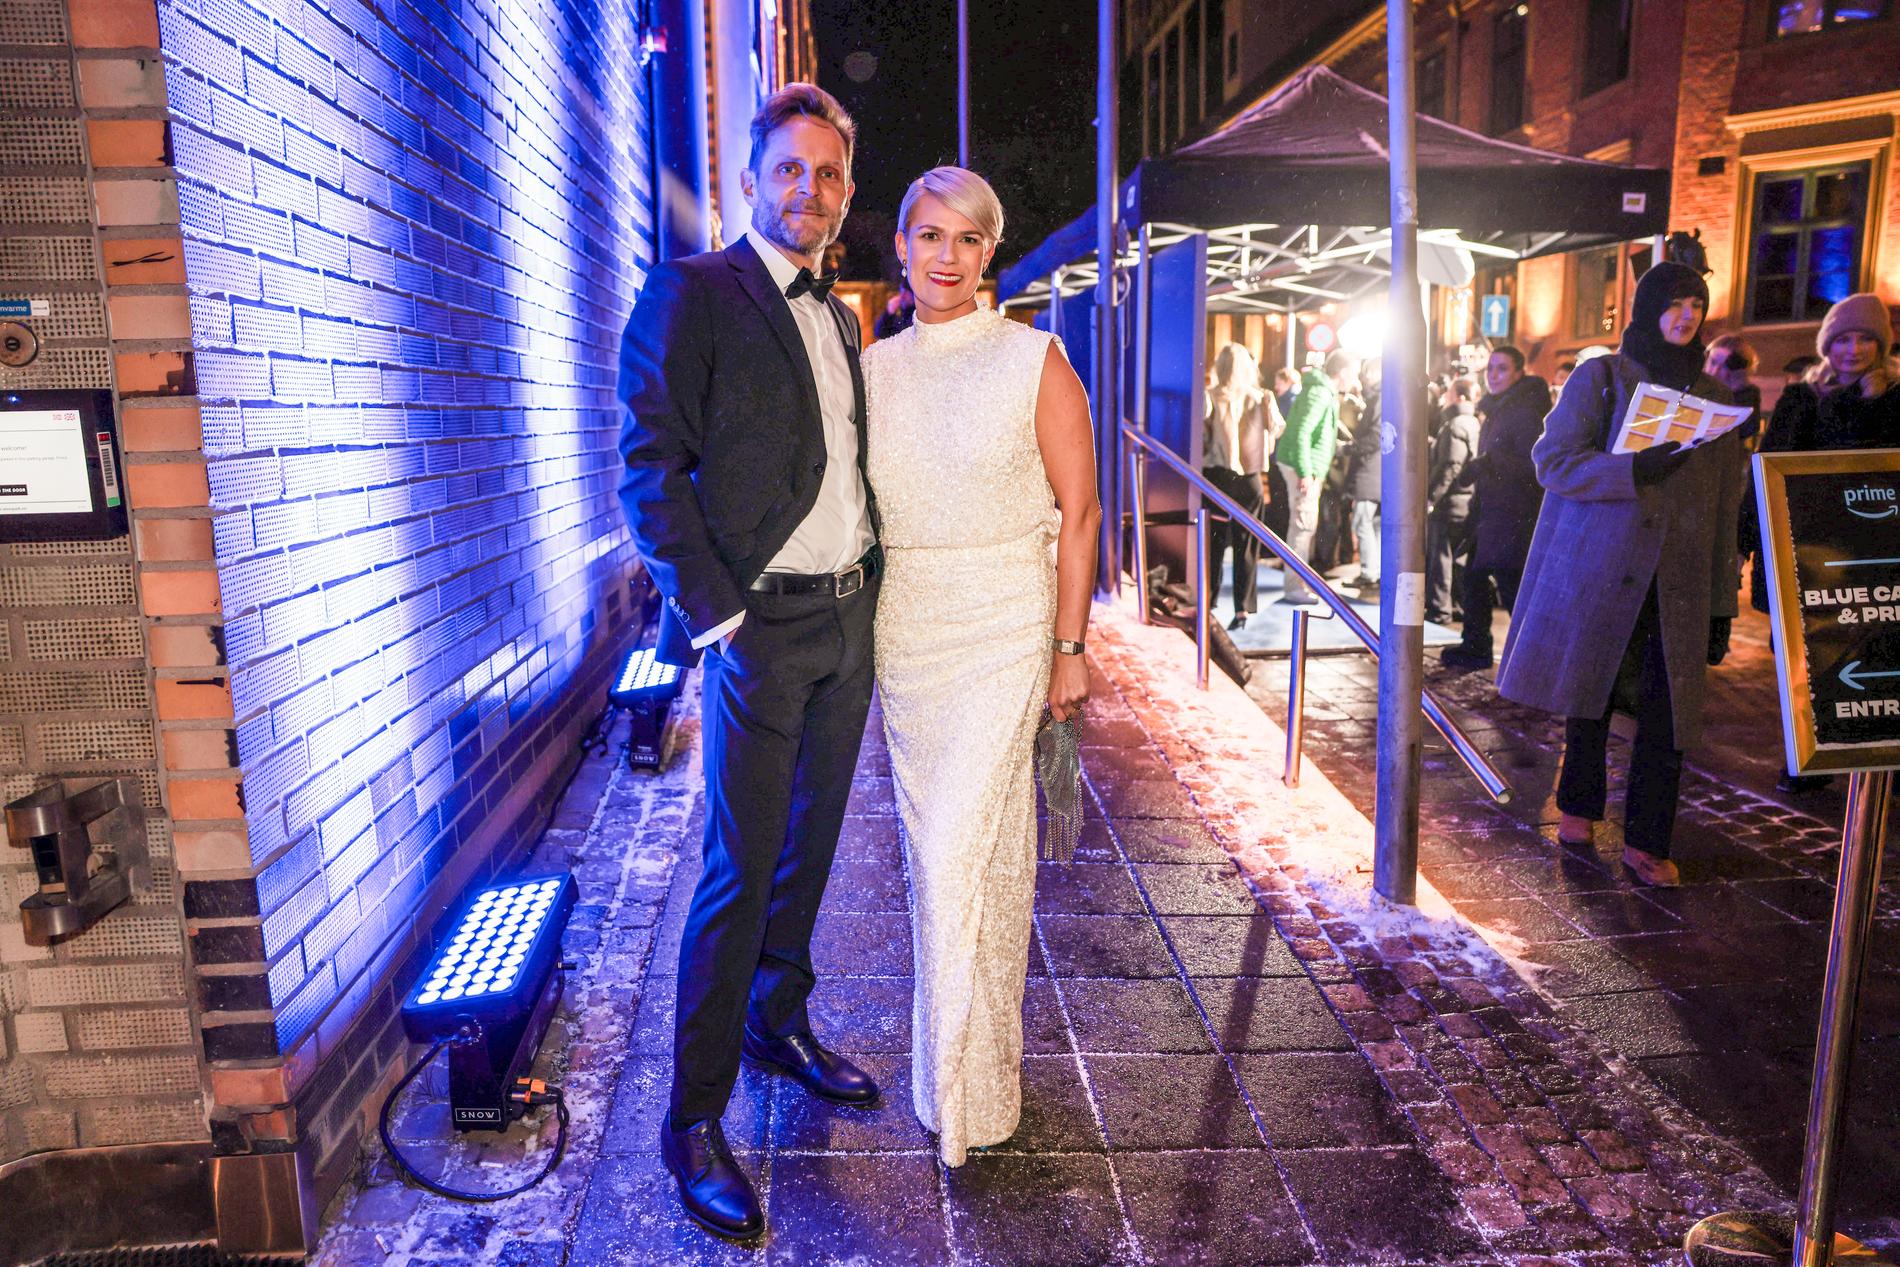 Sigrid Bond Tosvik and Anar Rød Johansen are lovers: – I am glowing